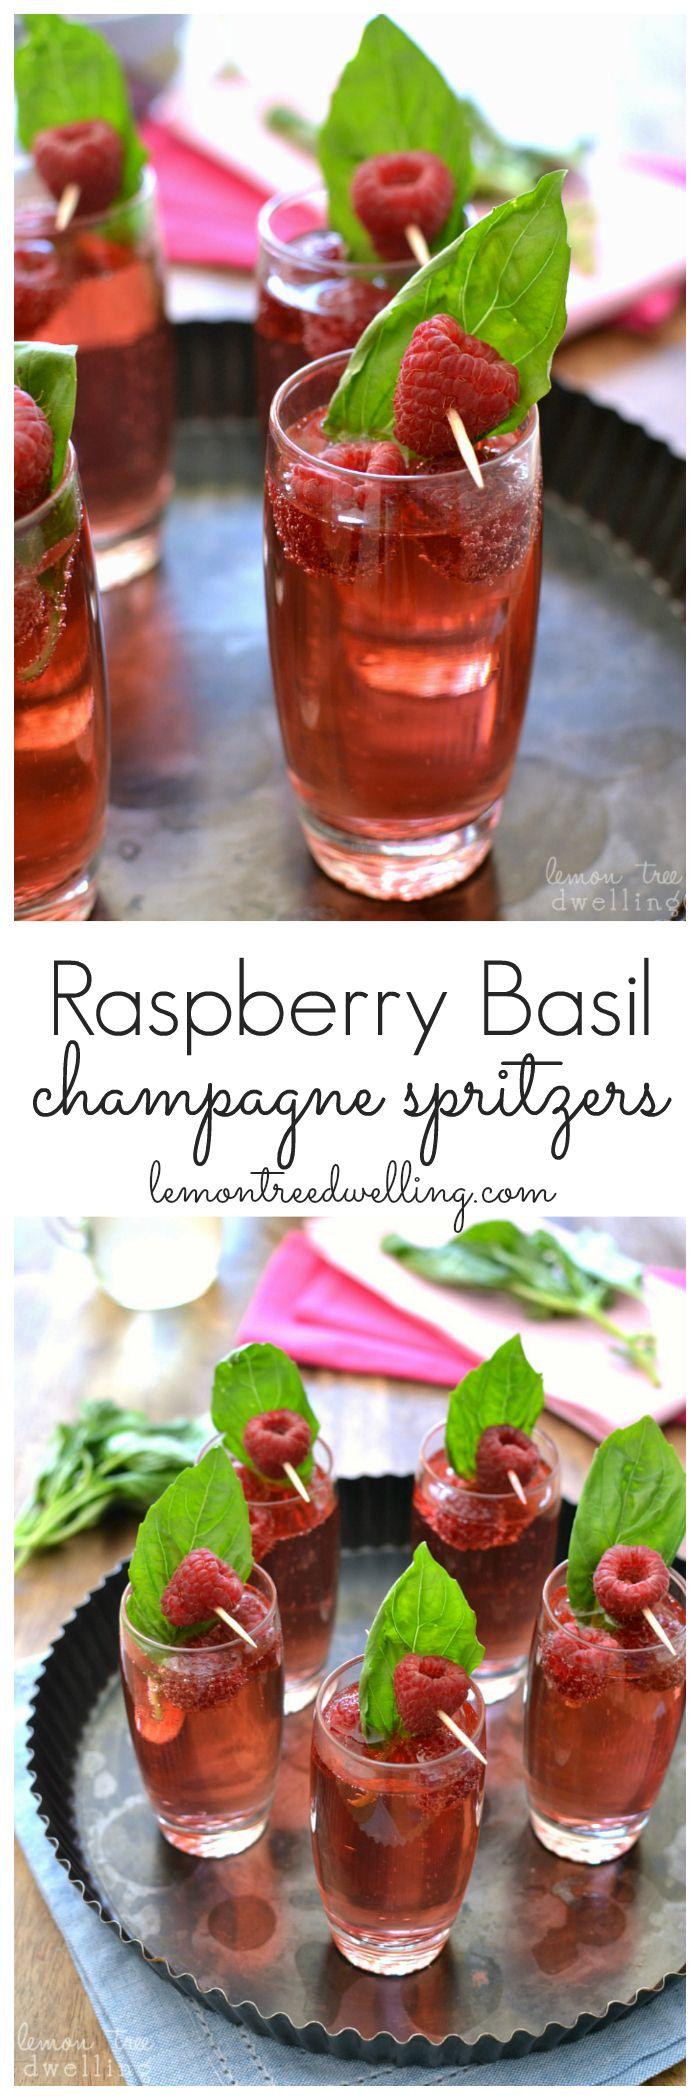 Wedding - Raspberry Basil Champagne Spritzers